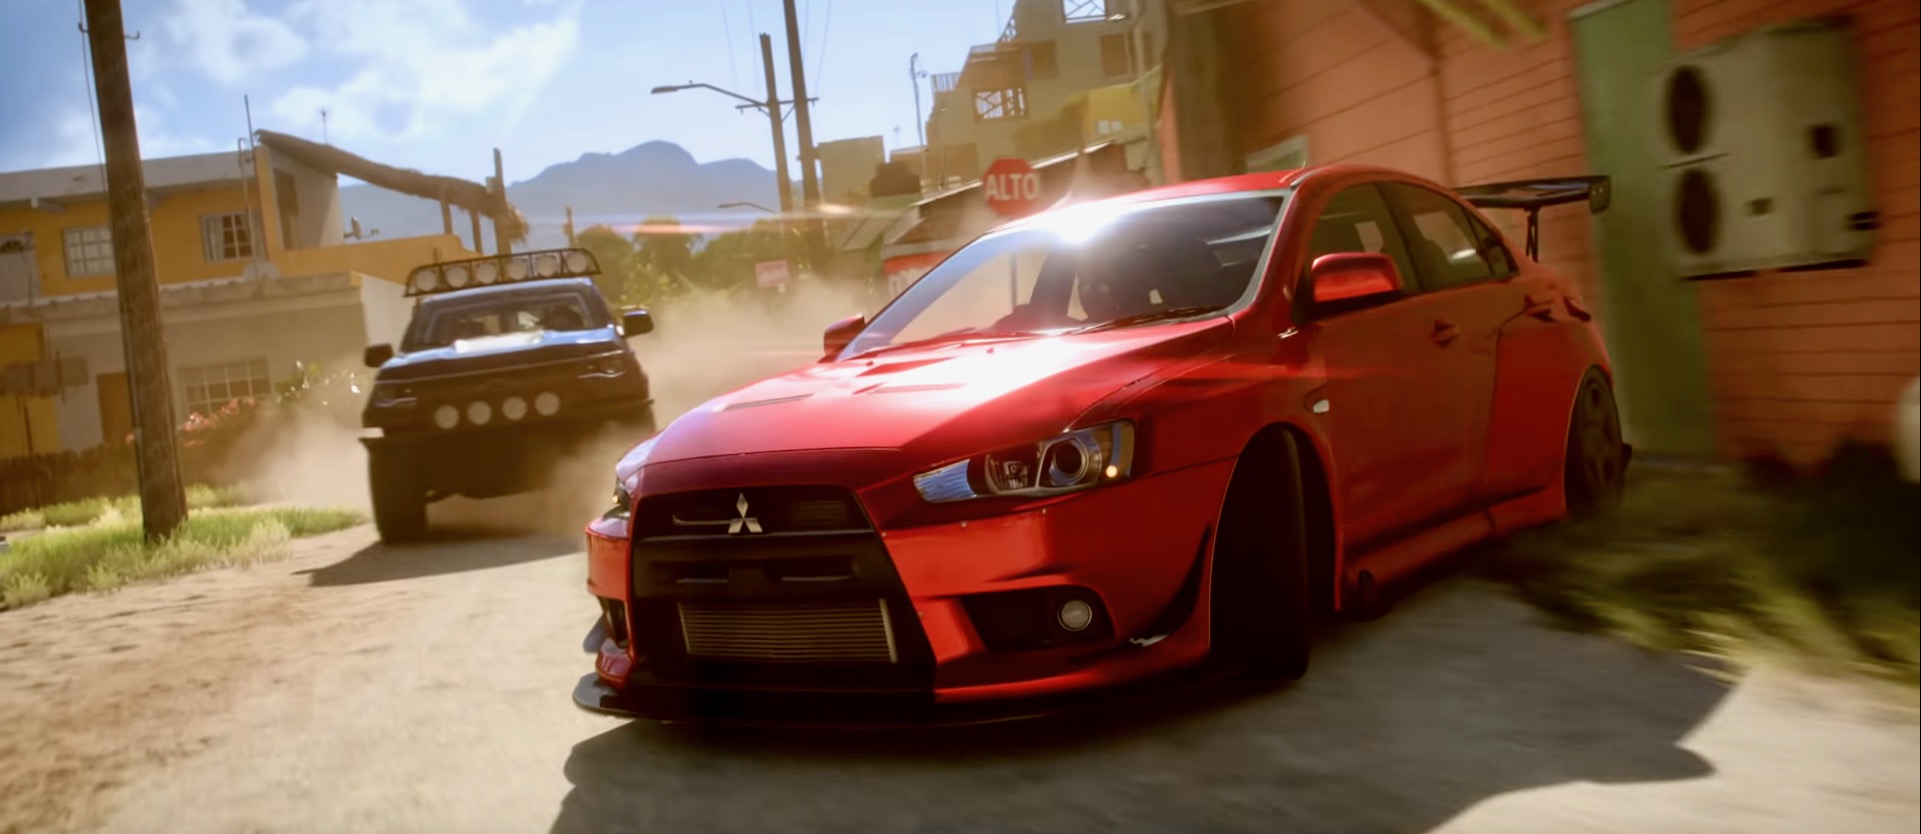 Forza Horizon 5 Official Initial Drive Trailer 